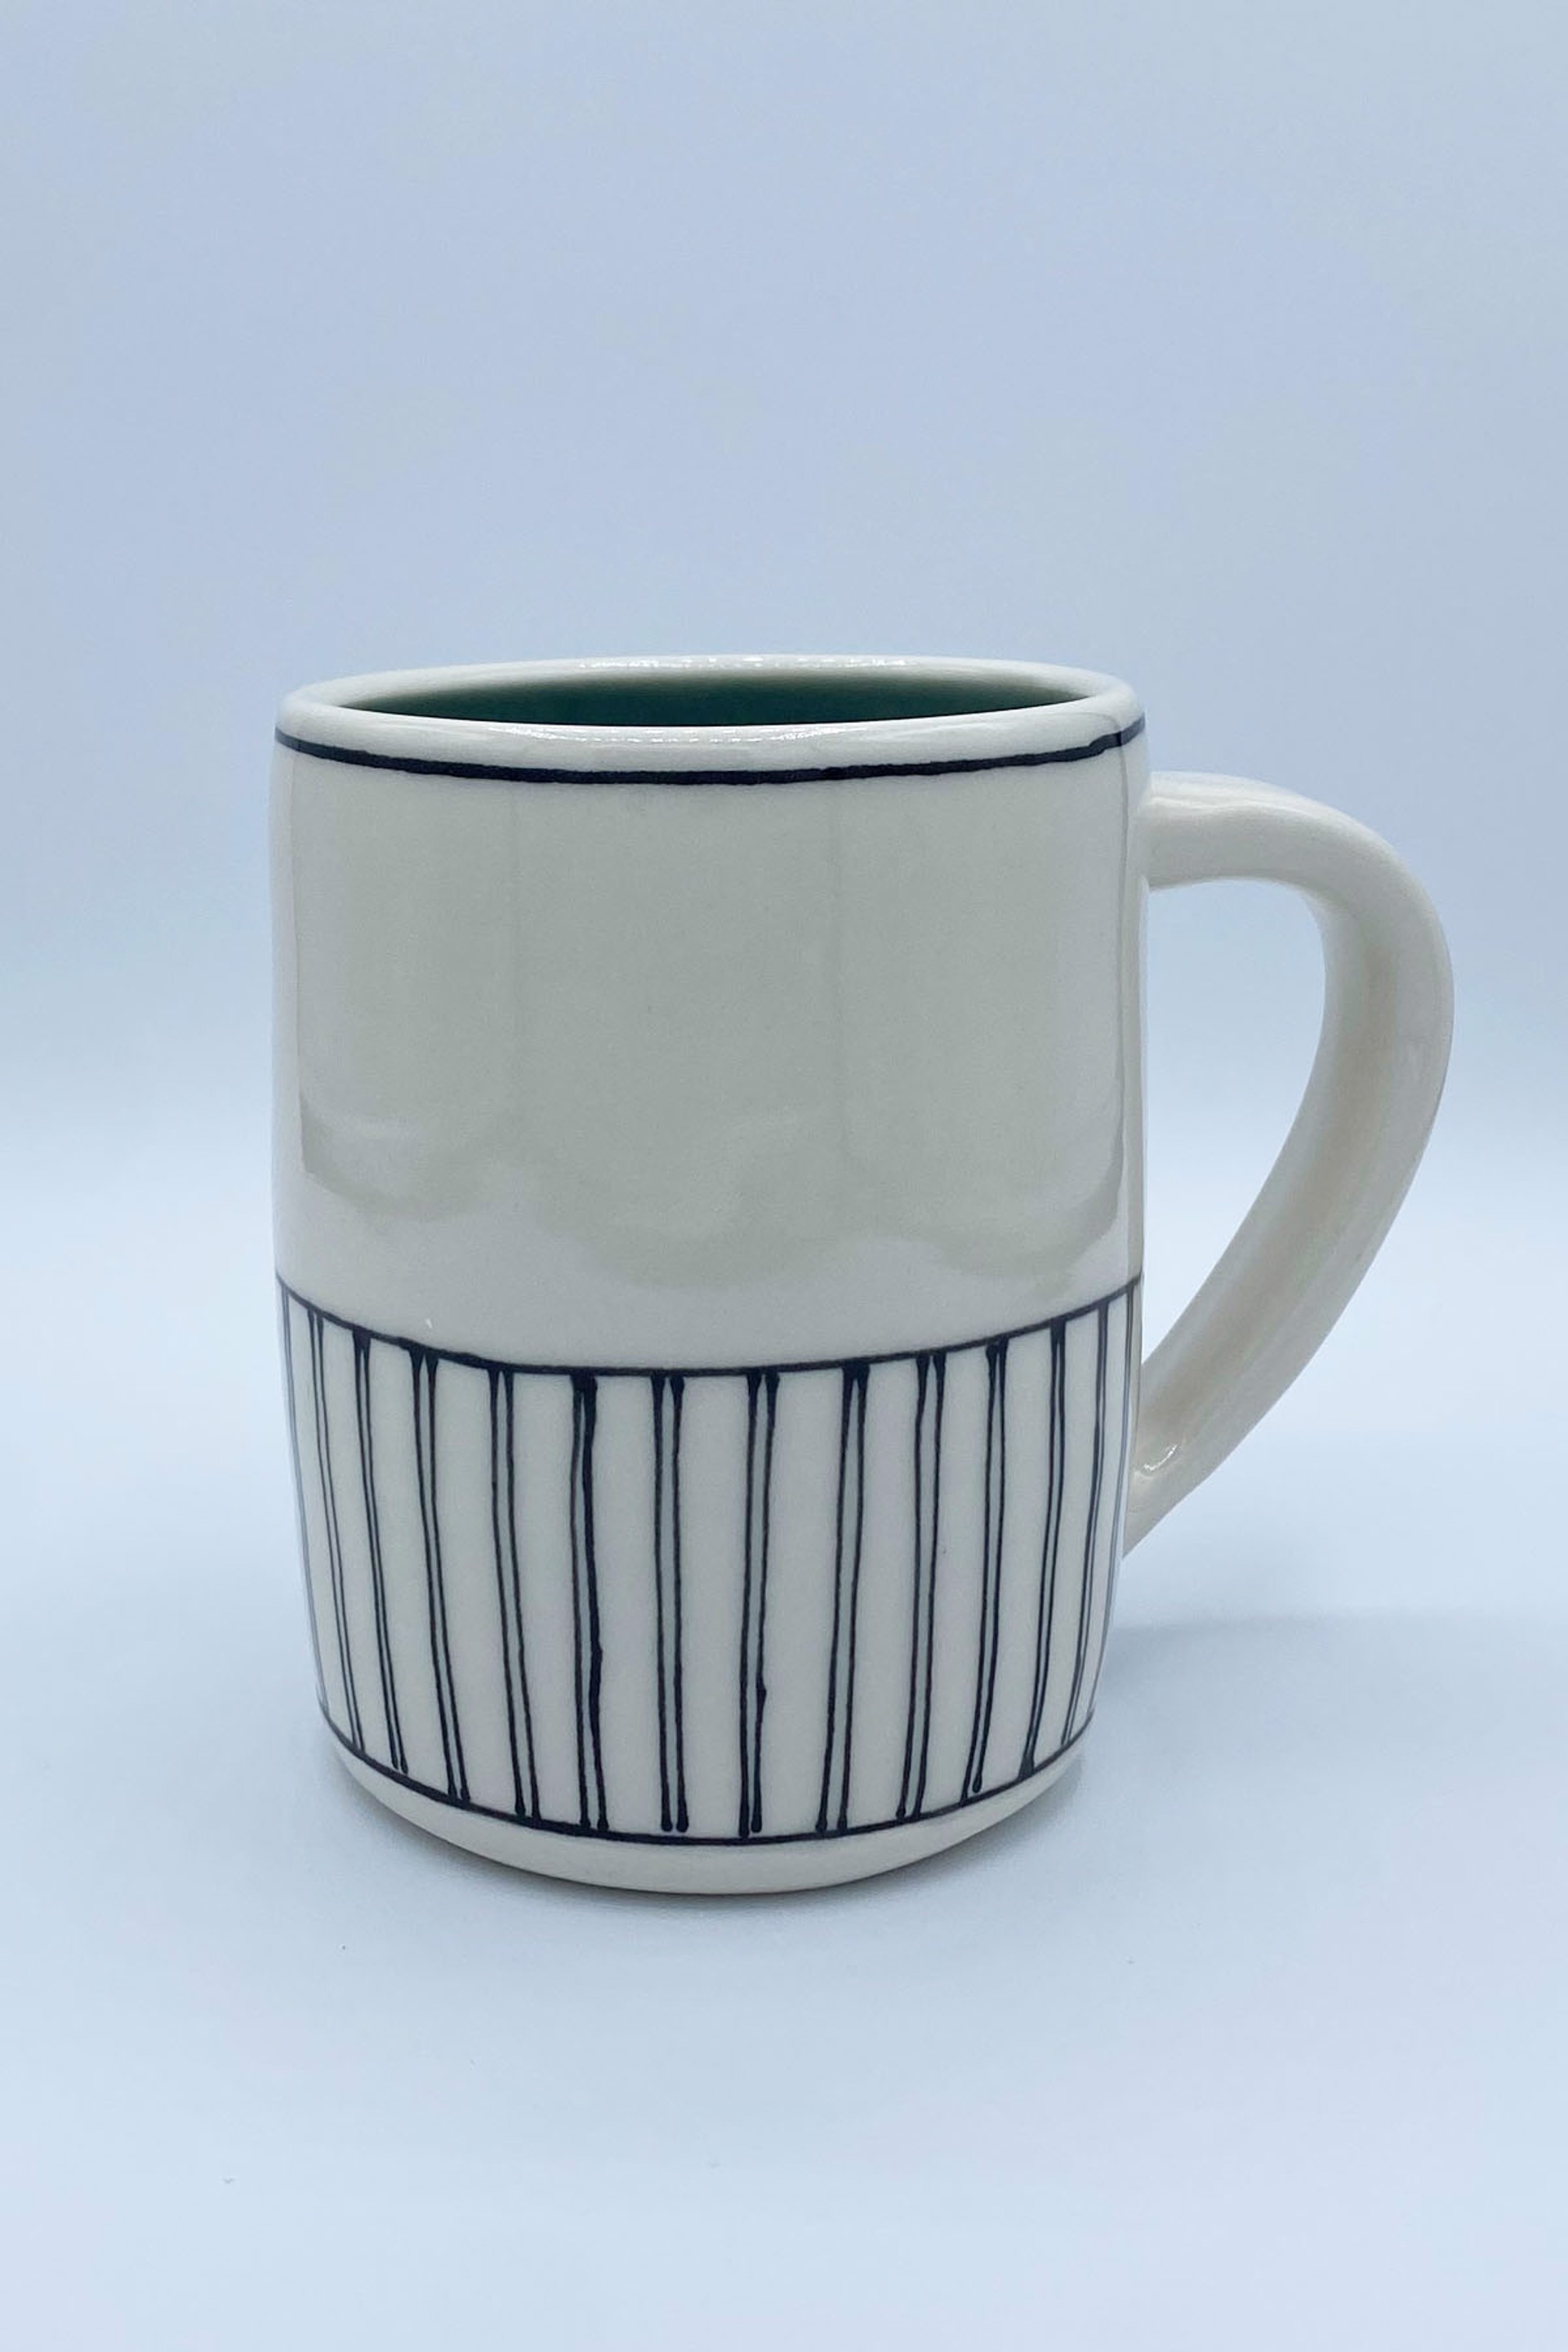 Mug 3 by Laura Cooke